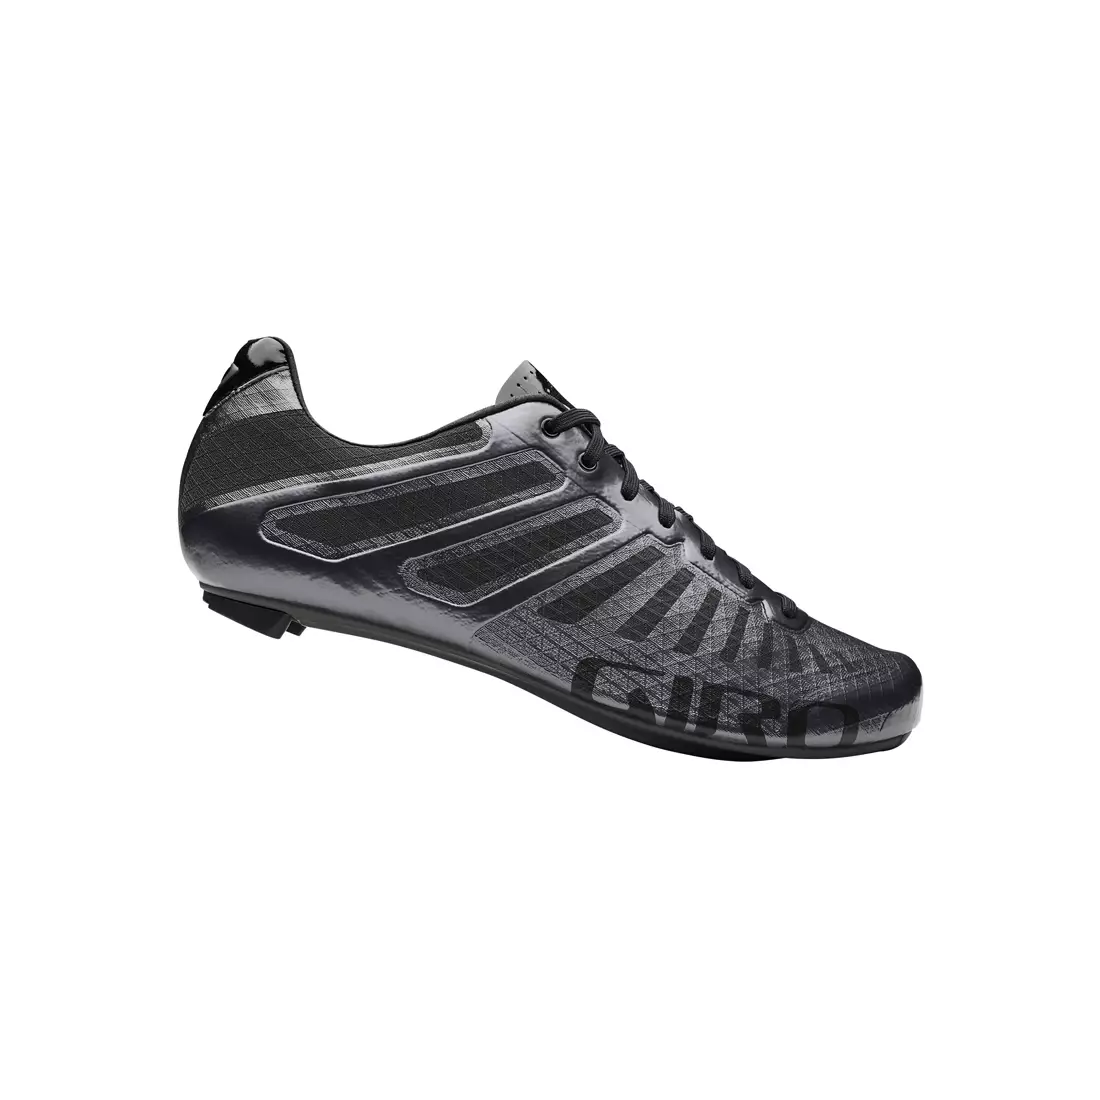 Men's road bike shoes GIRO EMPIRE SLX CARBON black